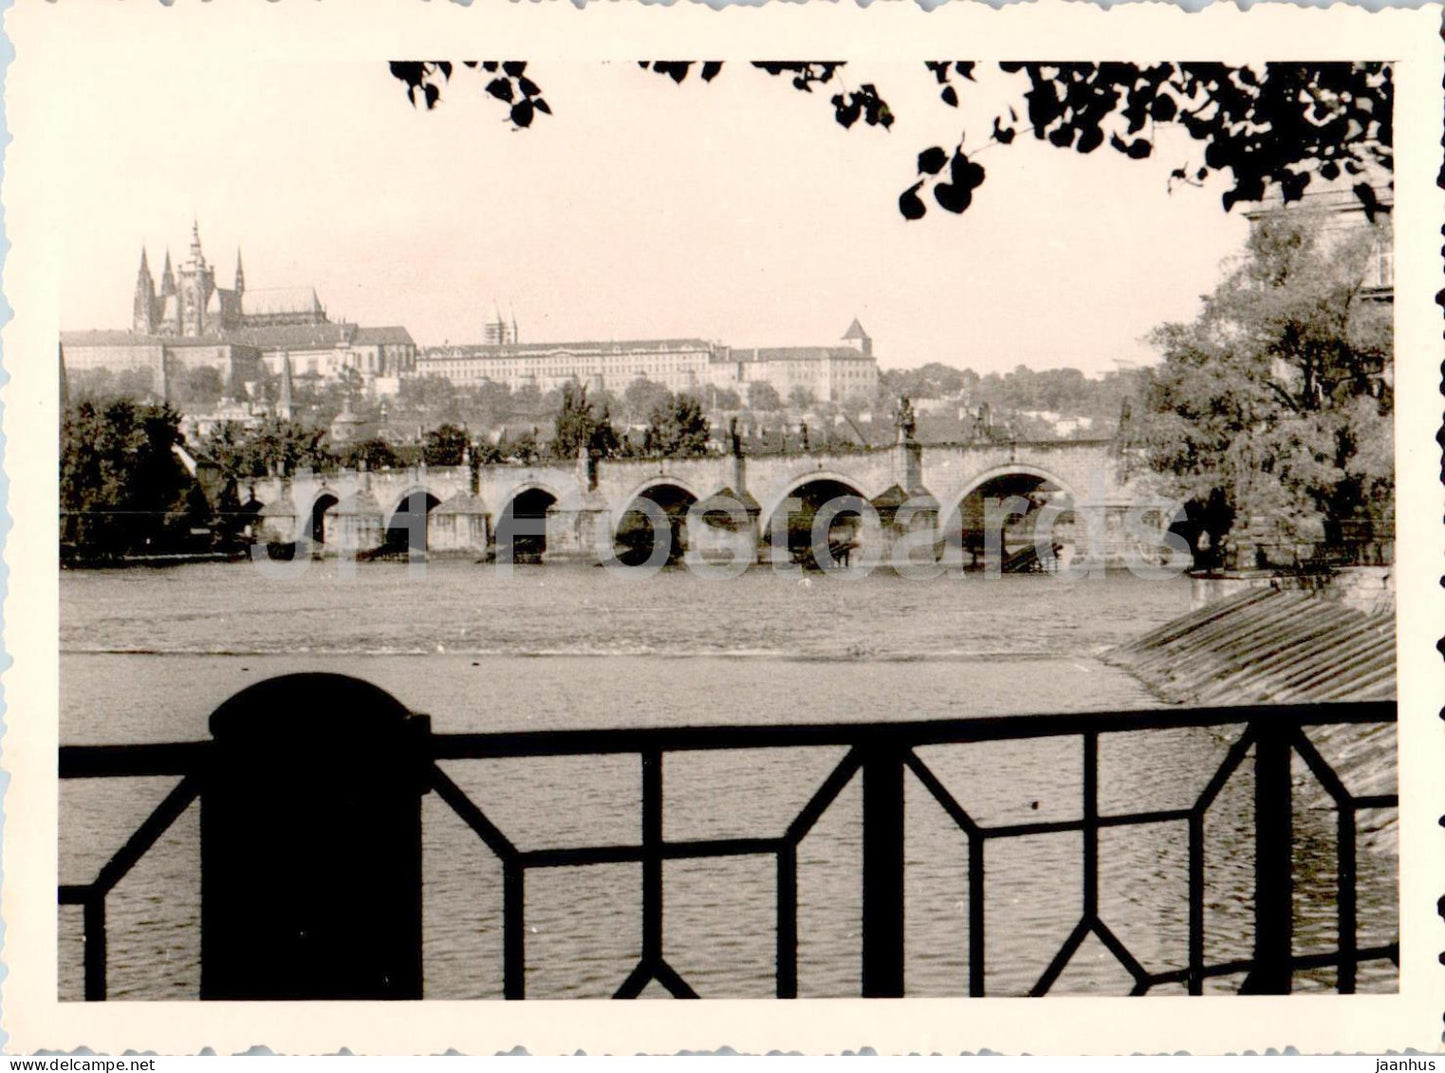 Praha - Prague - Karluv most - Charles Bridge - old photo - 1958 - Czech Republic - Czechoslovakia - unused - JH Postcards